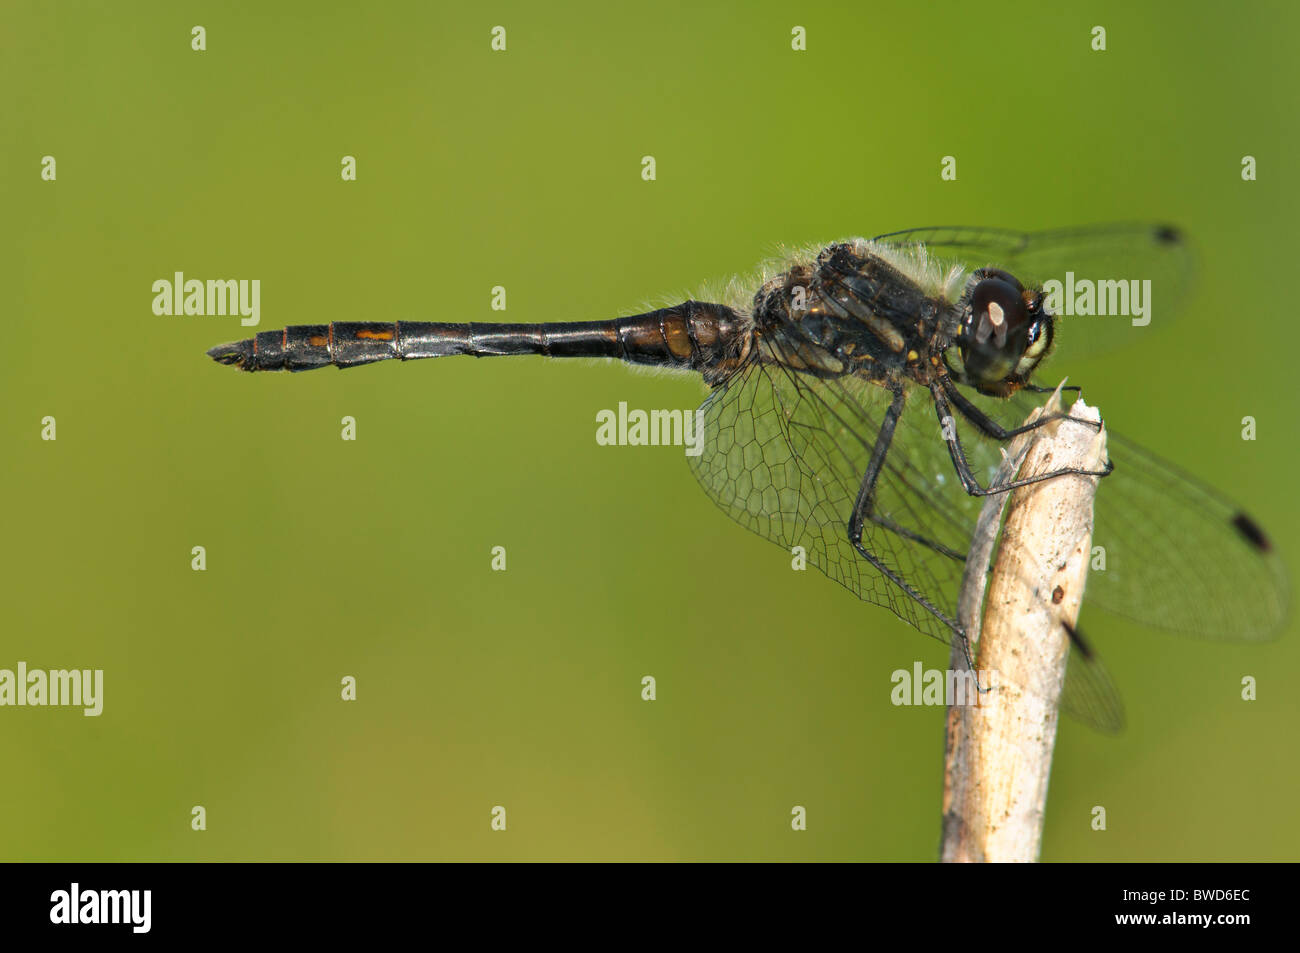 Black Darter Sympetrum danae dragonfly resting Stock Photo